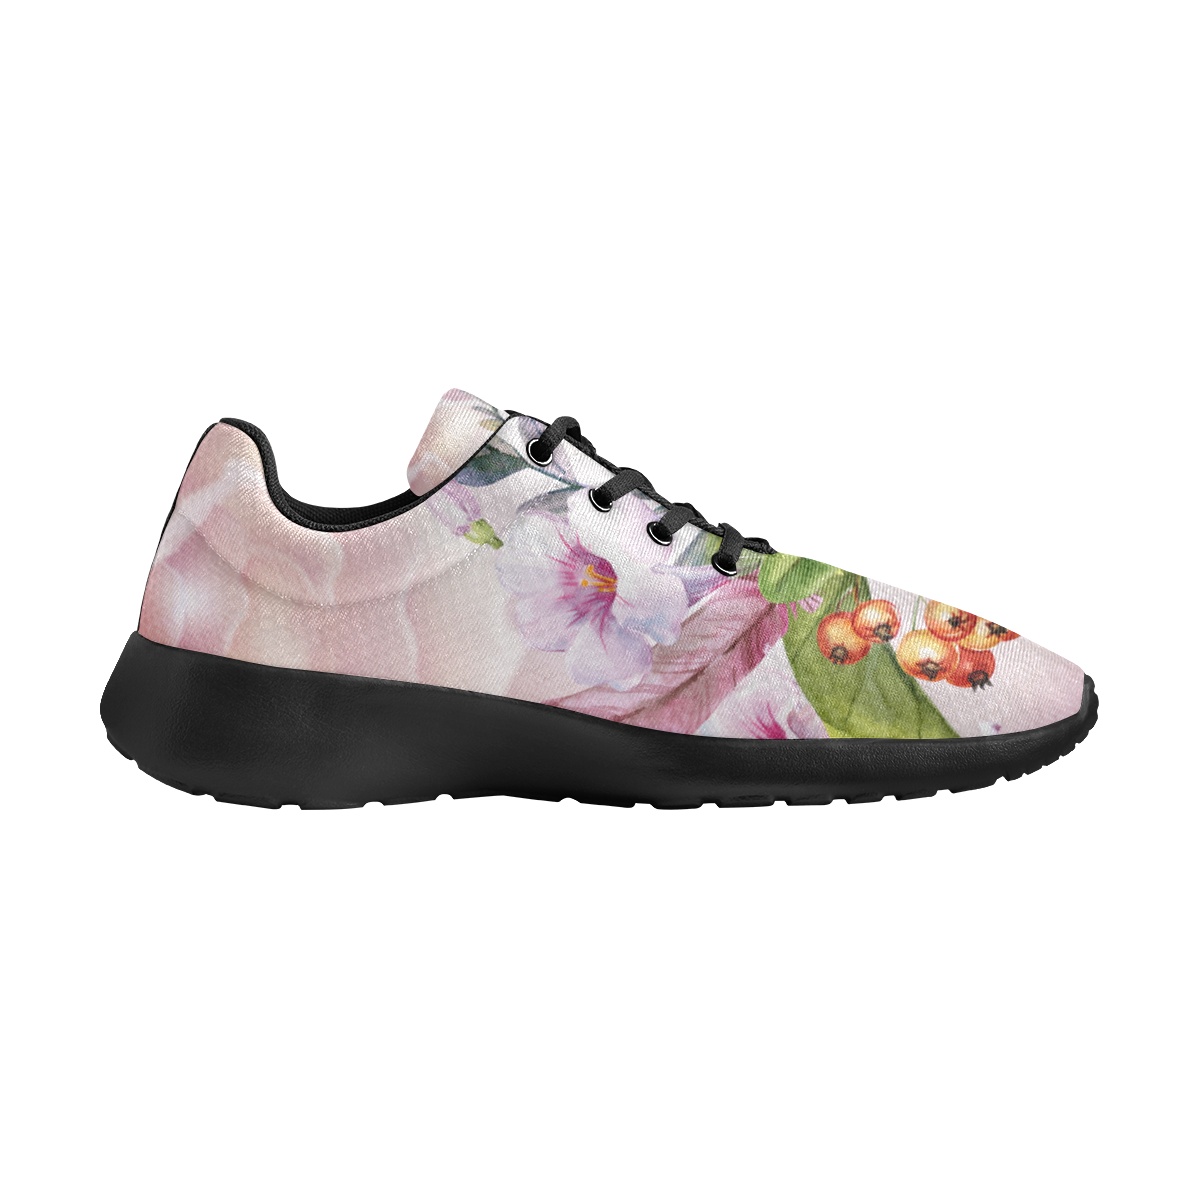 Wonderful flowers Women's Athletic Shoes (Model 0200)